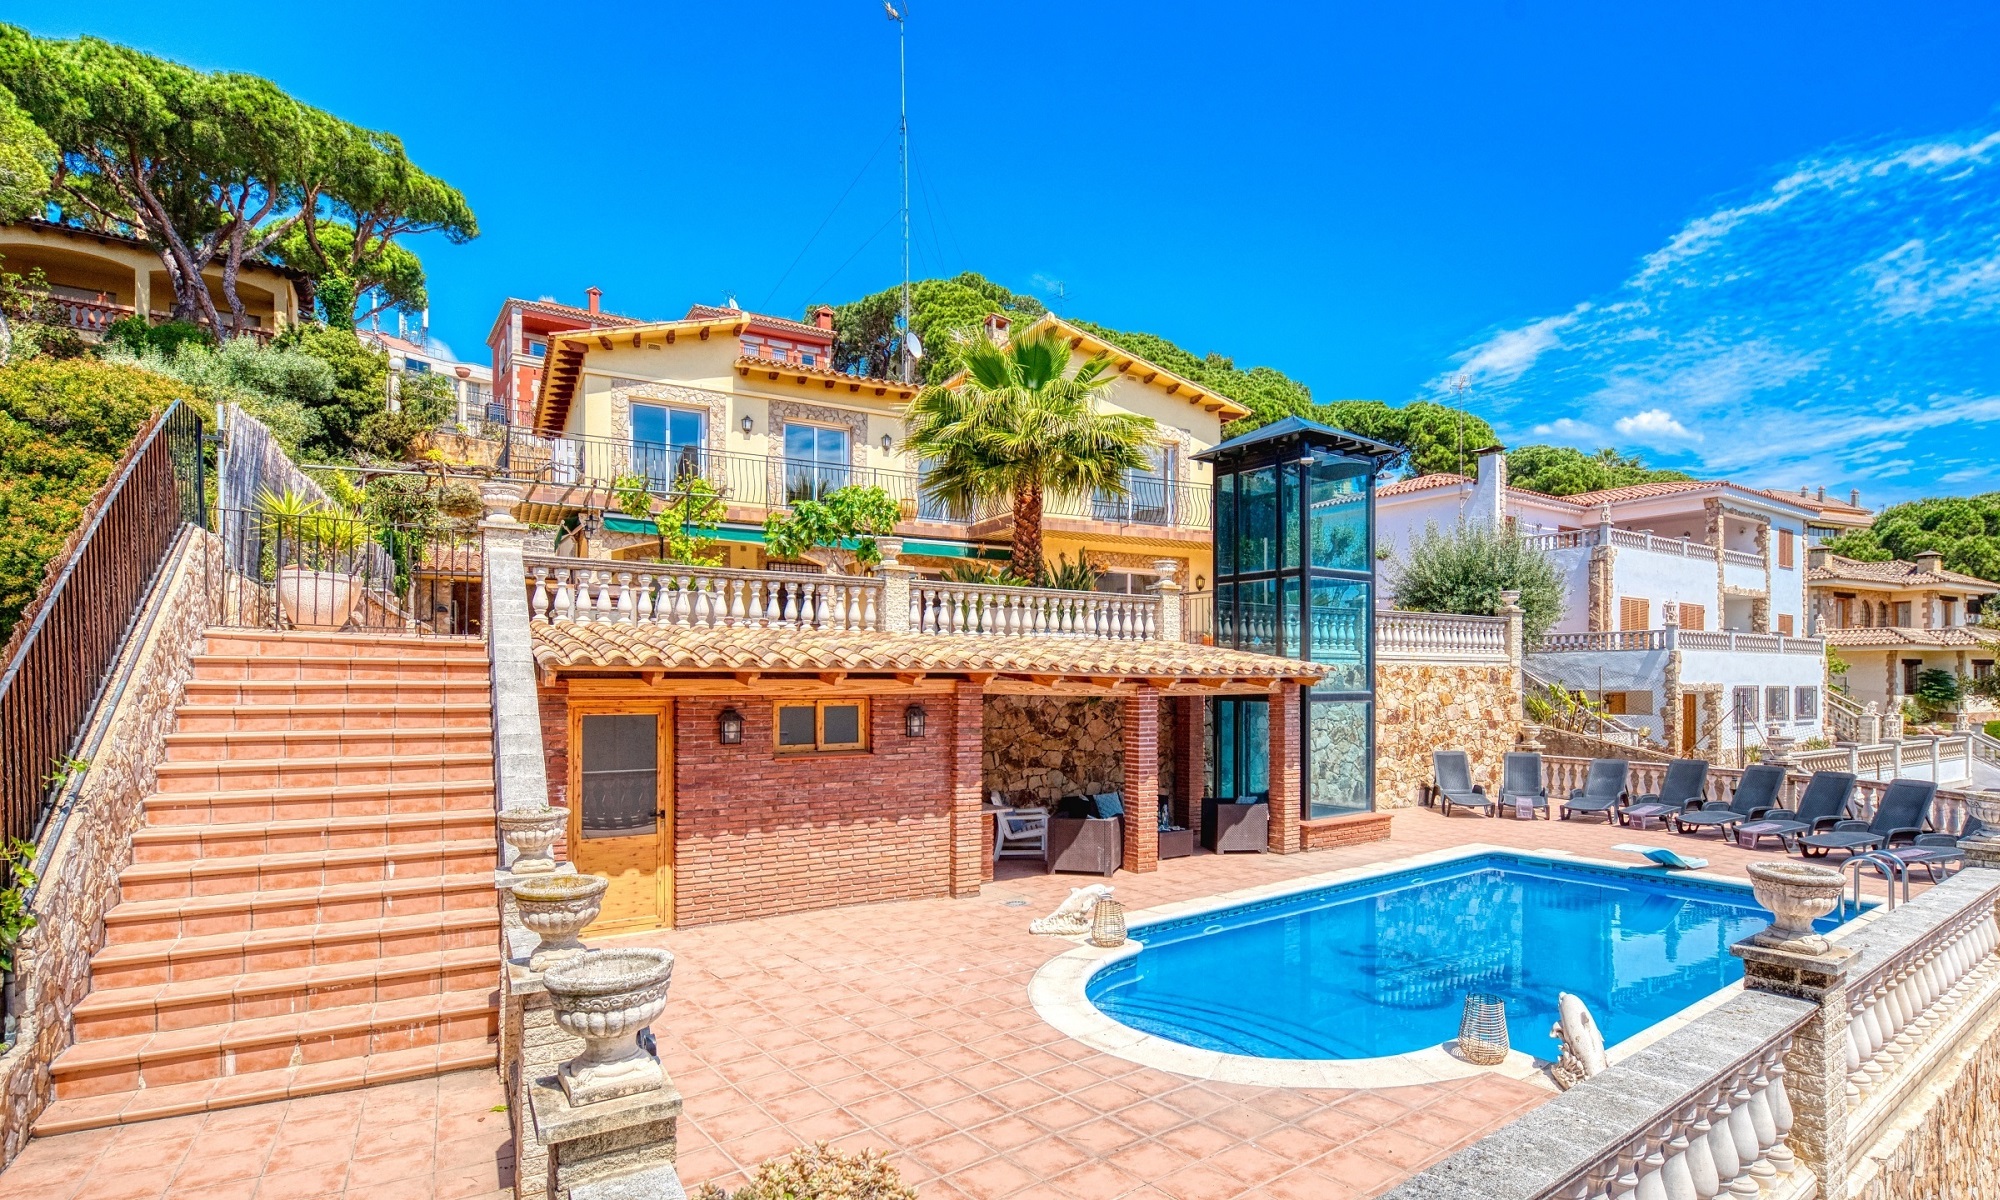 Spanish villa with swimming pool.